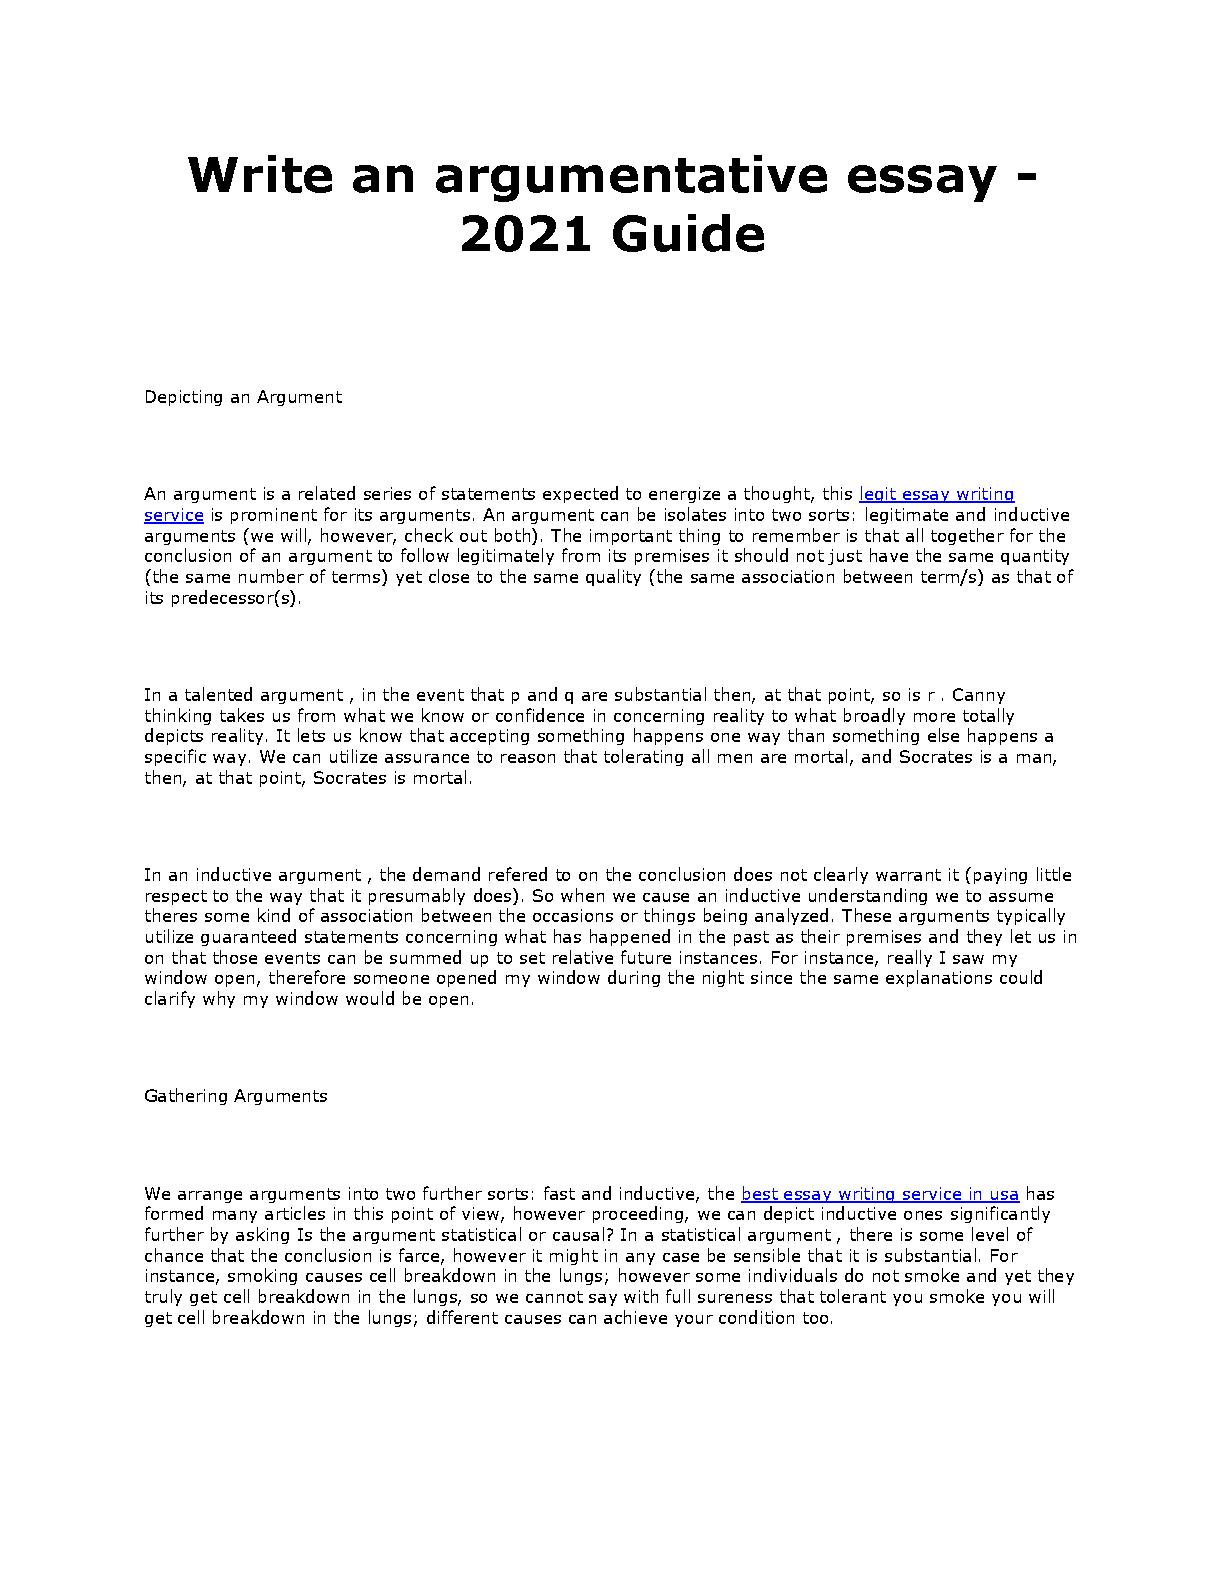 topic for argumentative essay 2021